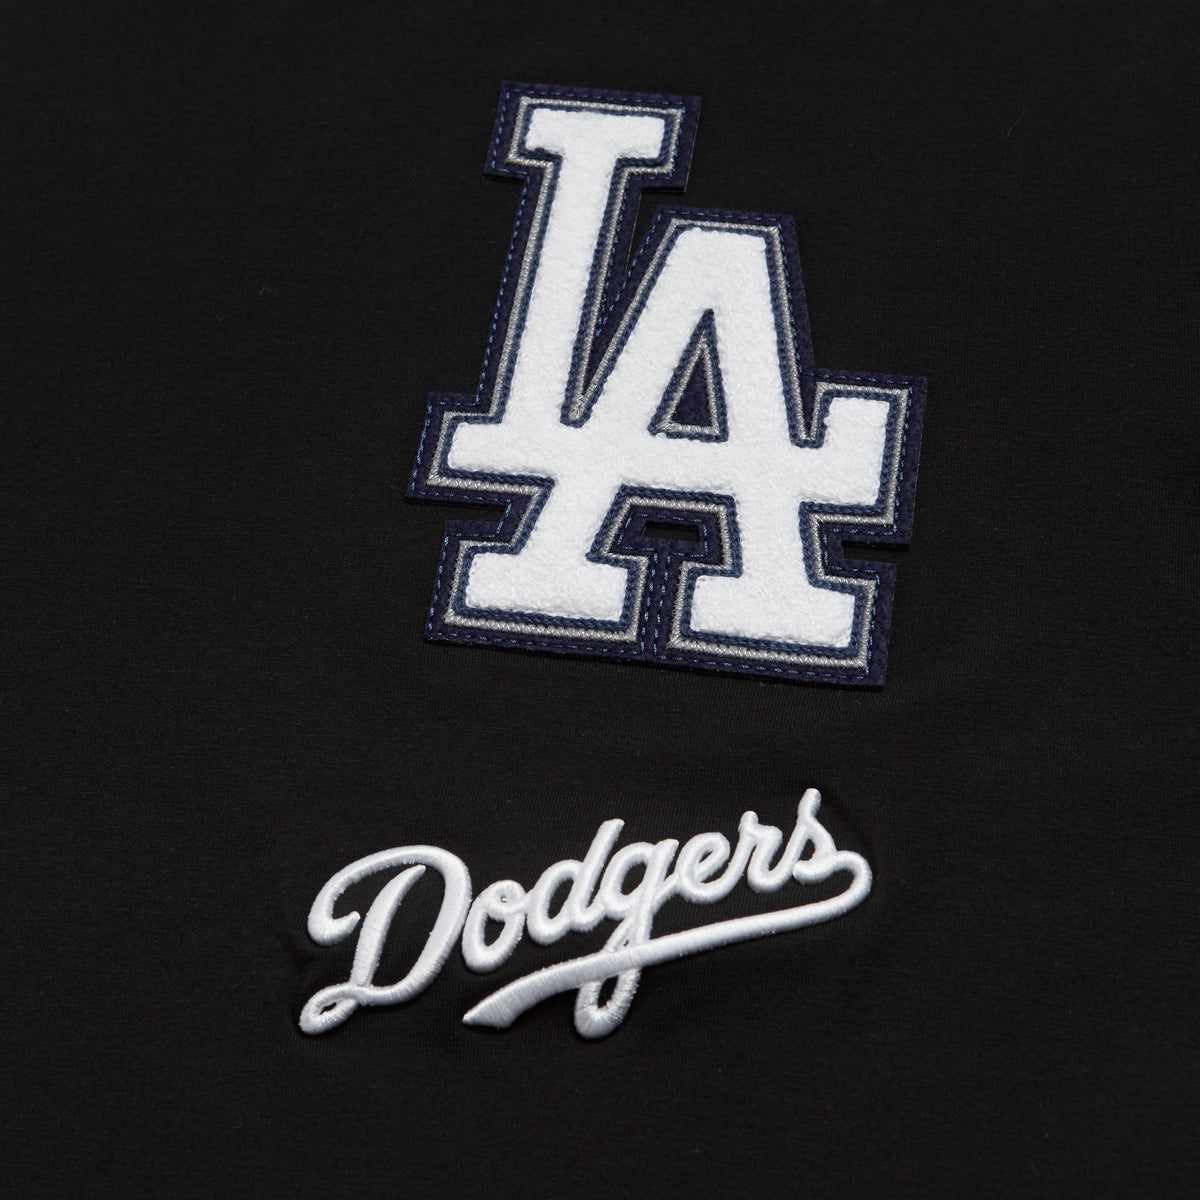 New Era Logo Select T-Shirt - Dodgers image 2